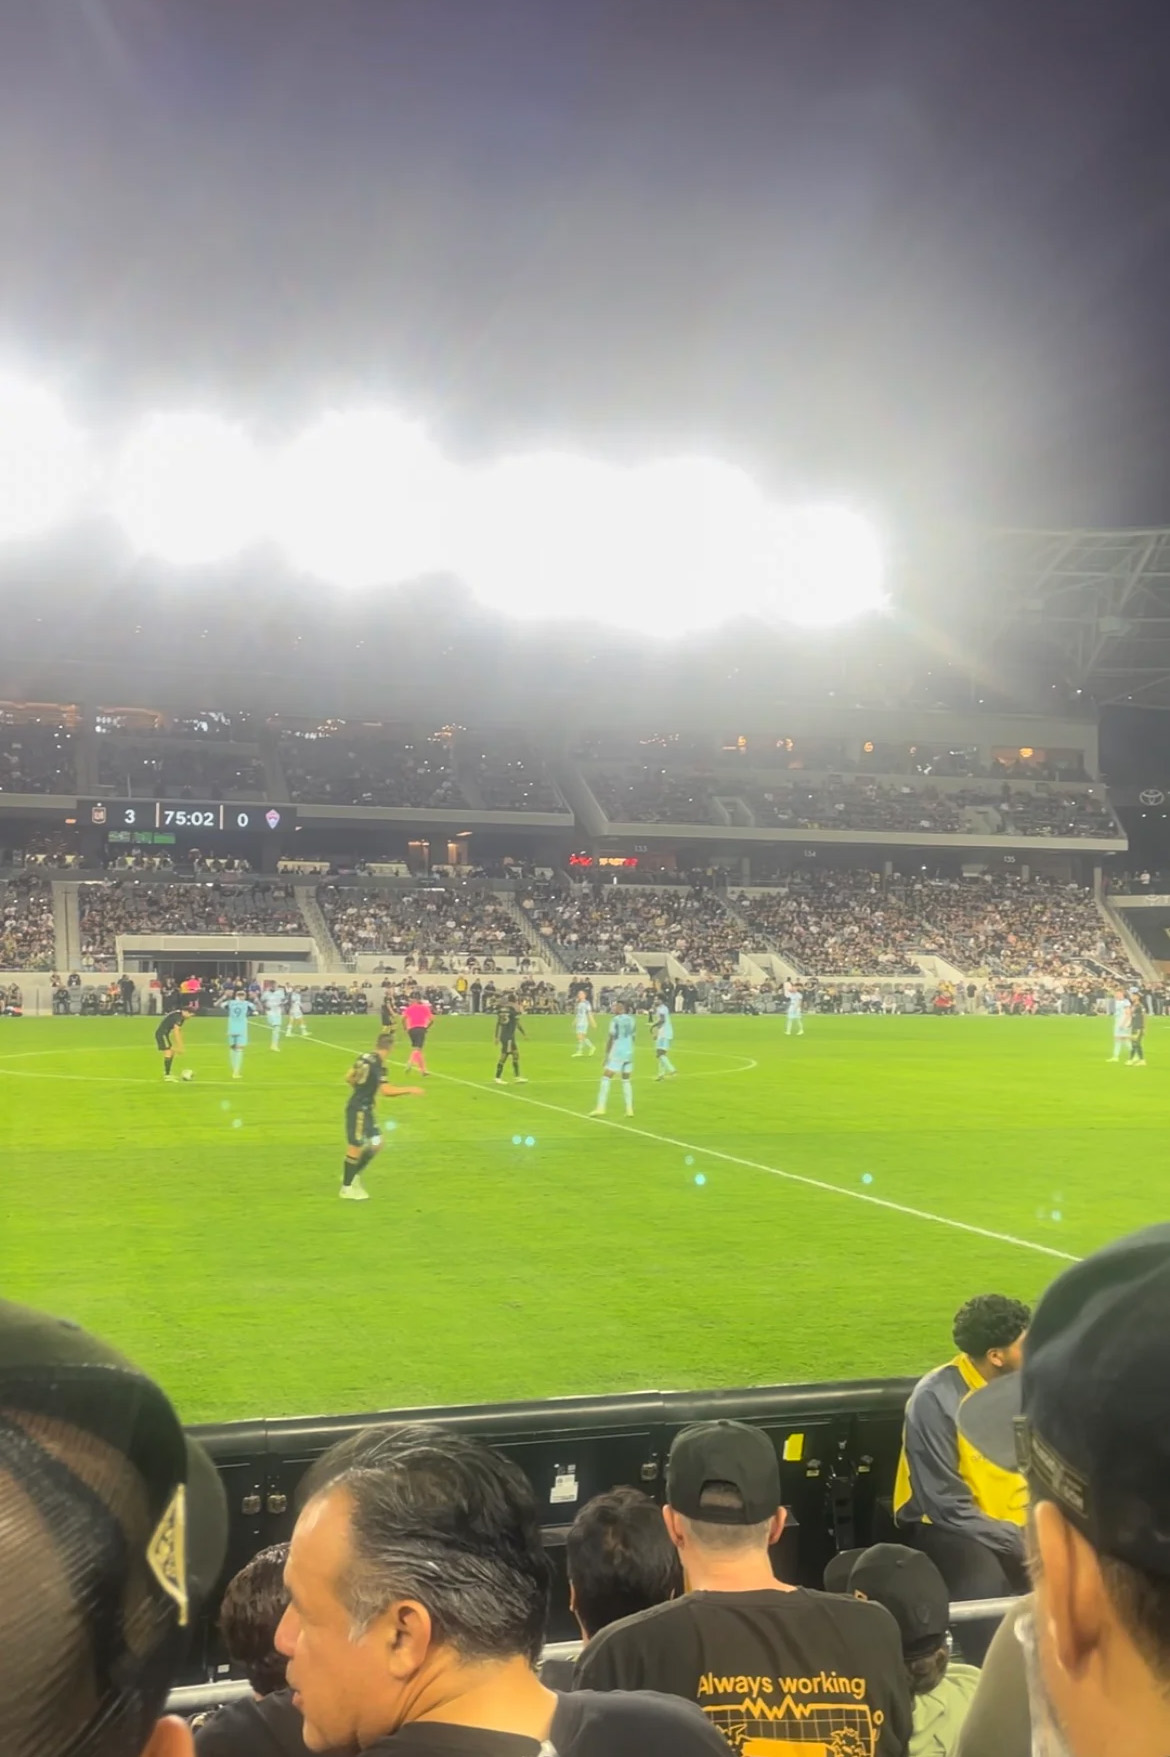 figueroa club c, row e seat view  for soccer - bmo stadium